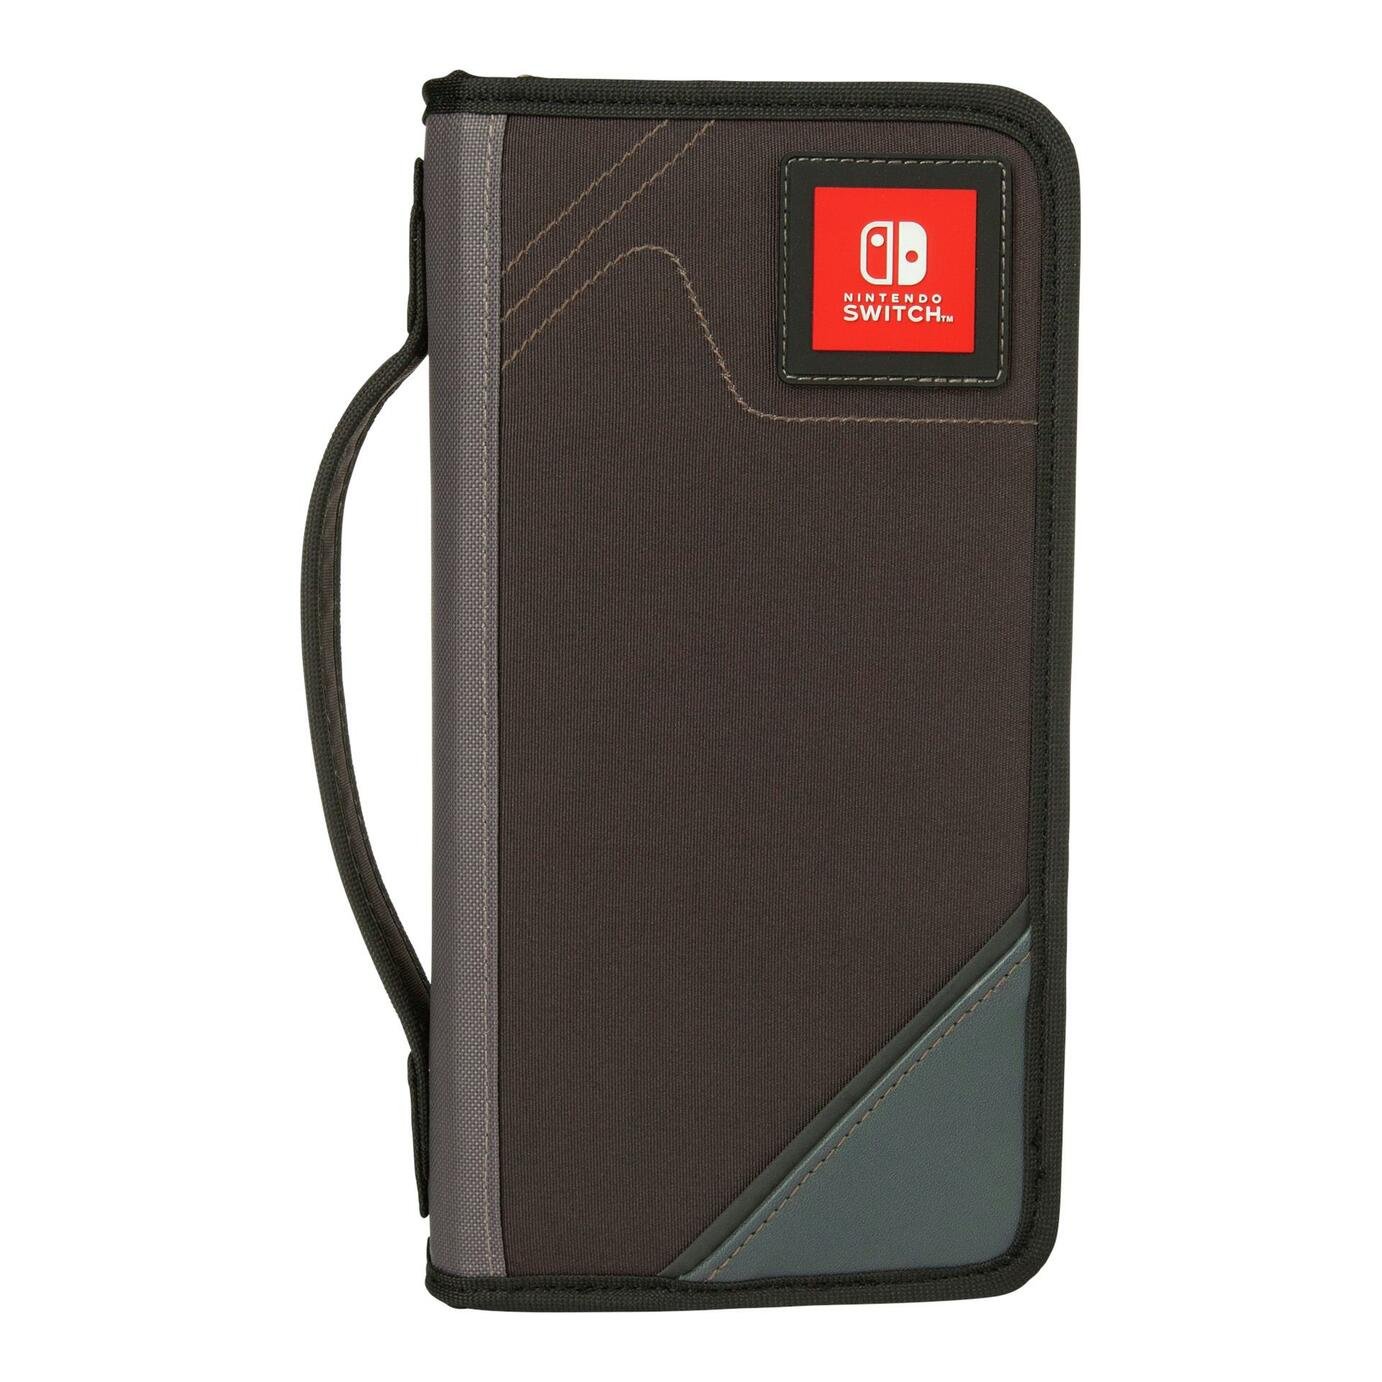 Nintendo Switch & Switch Lite Folio Case Review